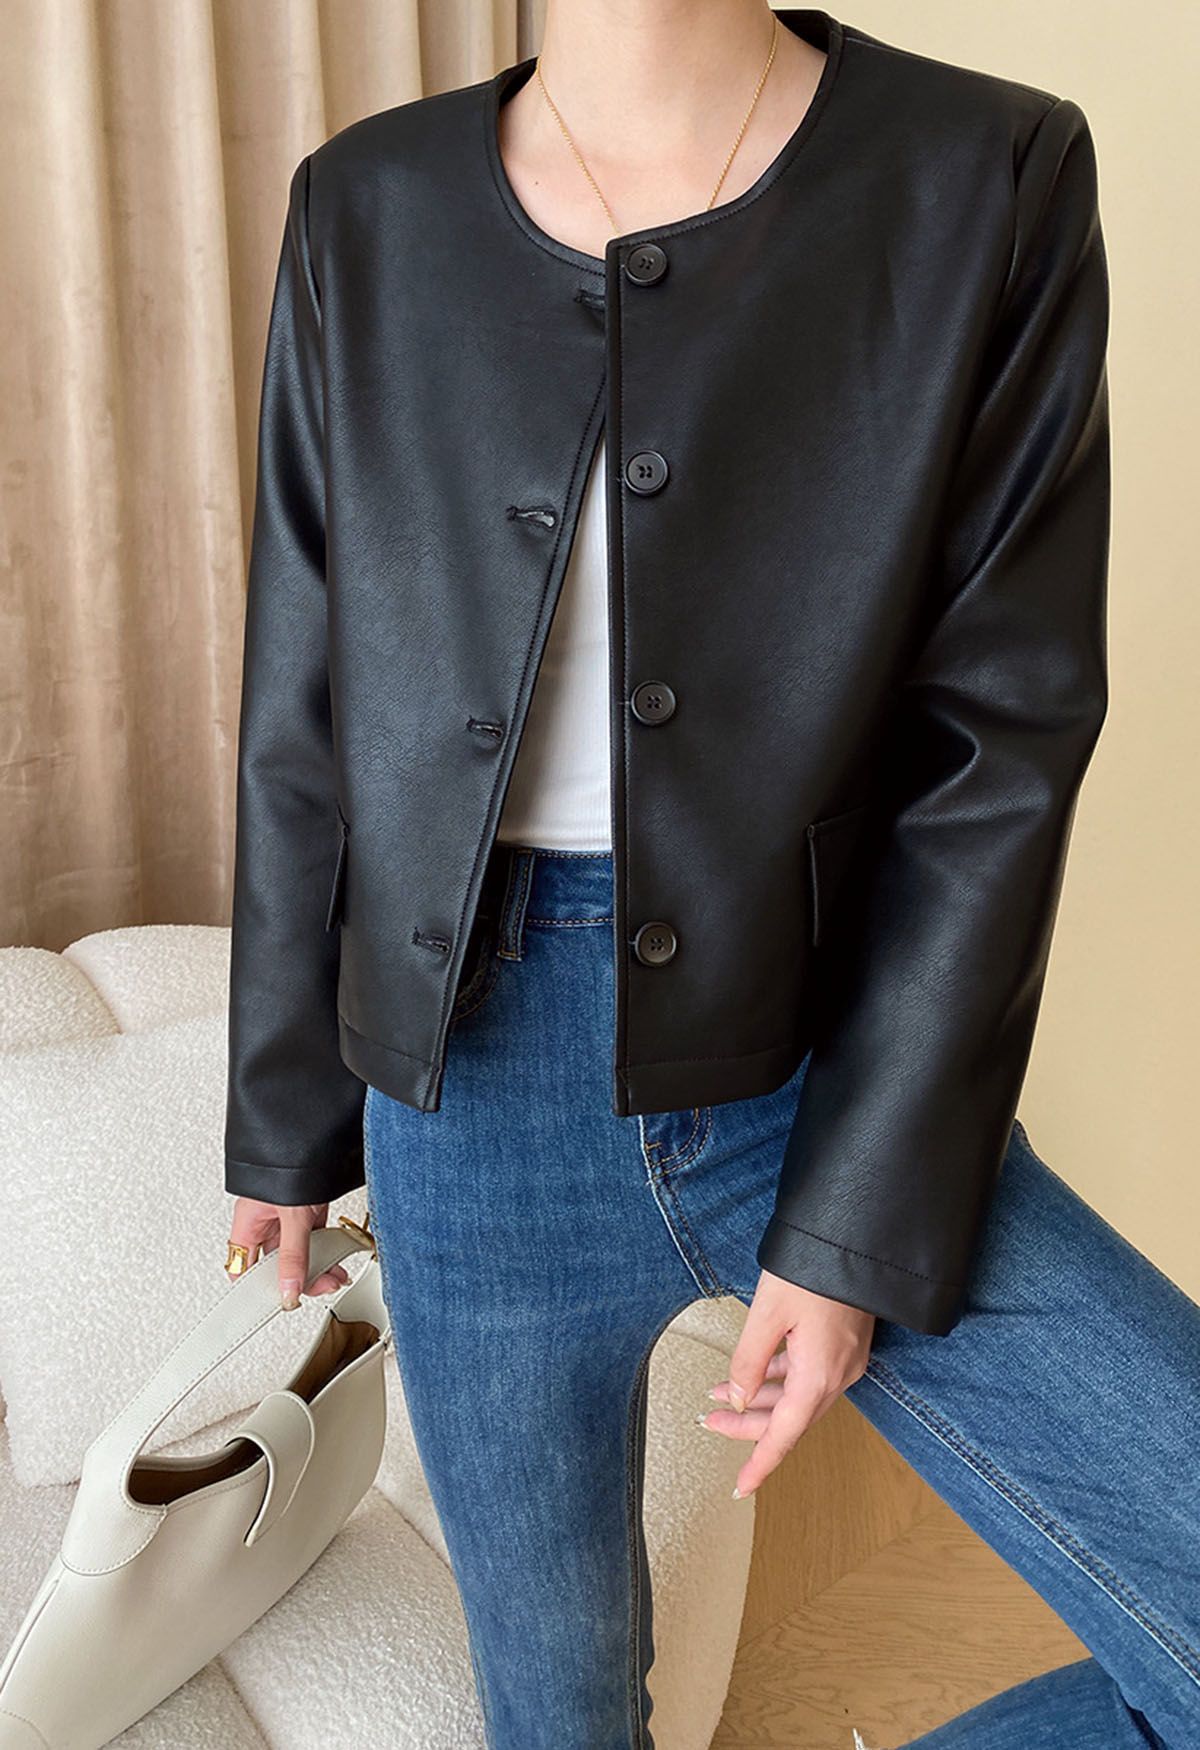 Geknöpfte, kurze Jacke aus Kunstleder in Schwarz